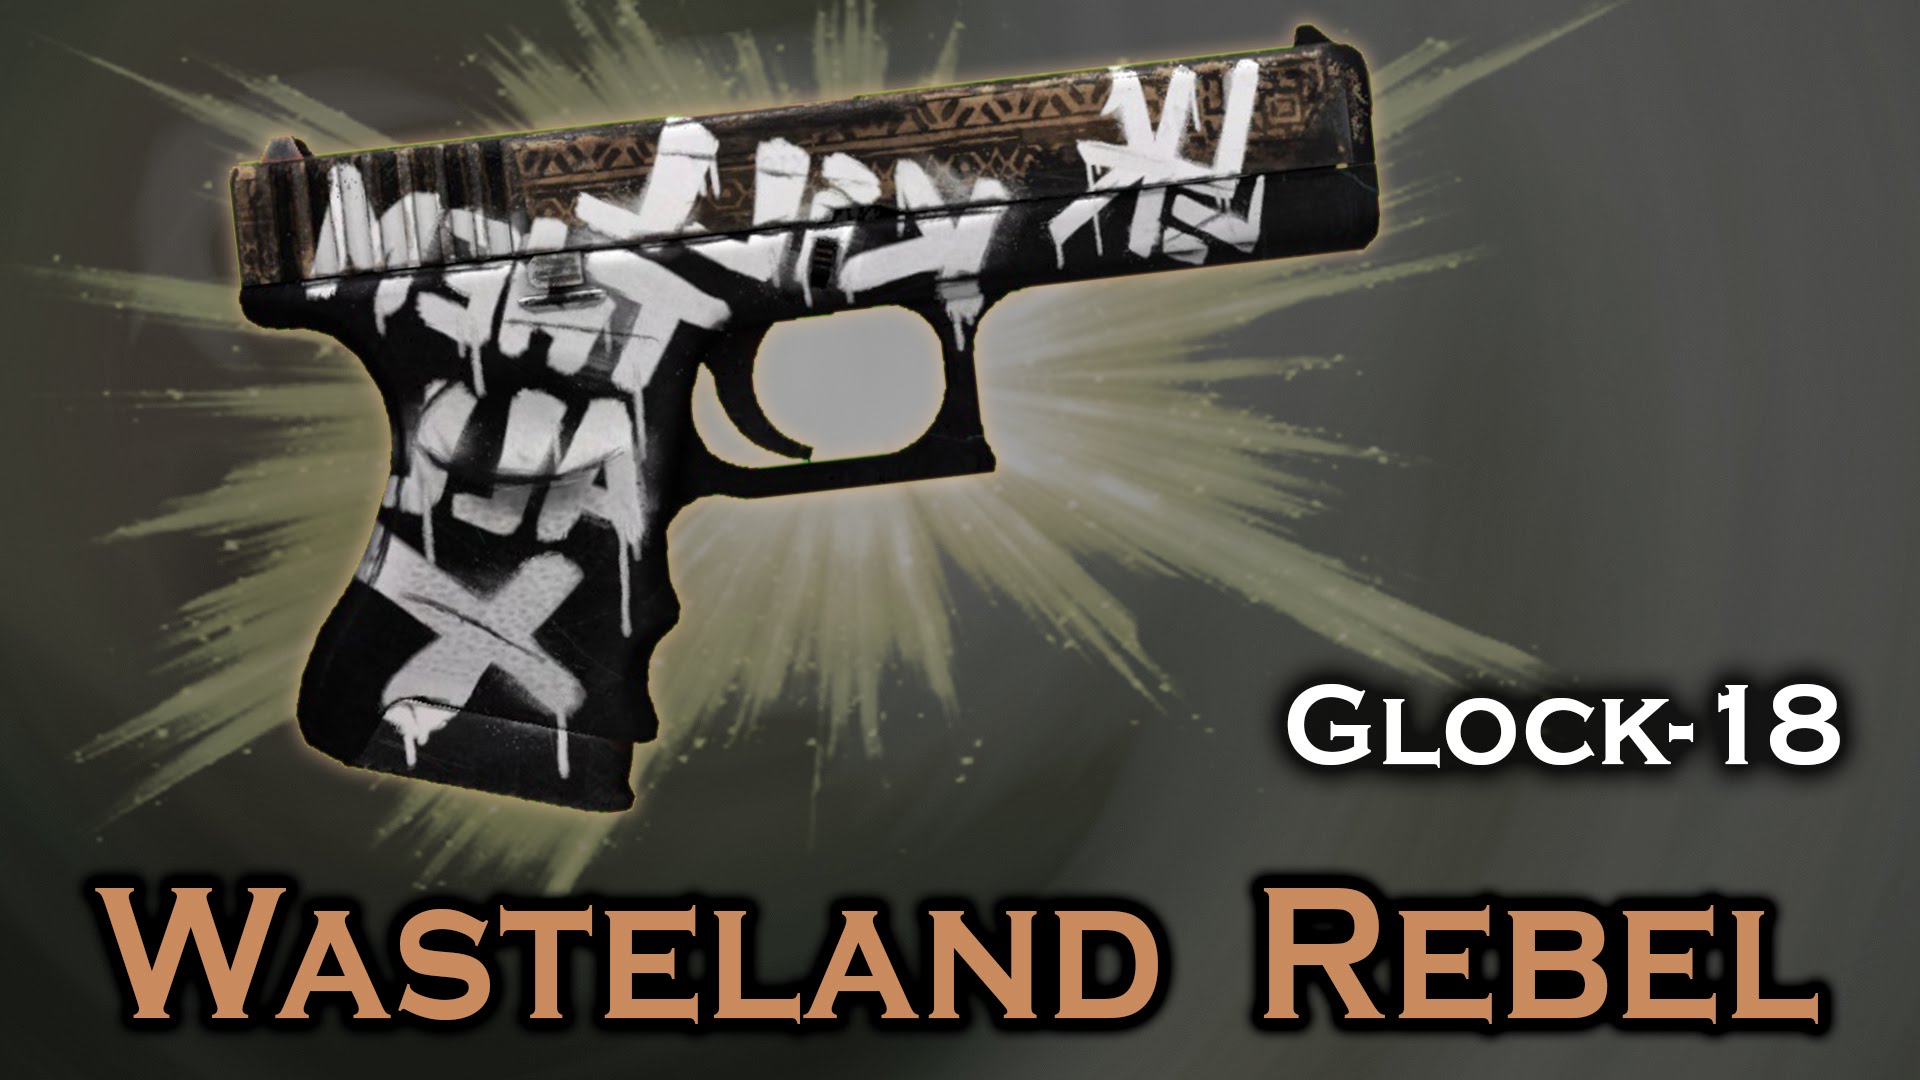 Glock Wasteland Rebel Alienware Arena